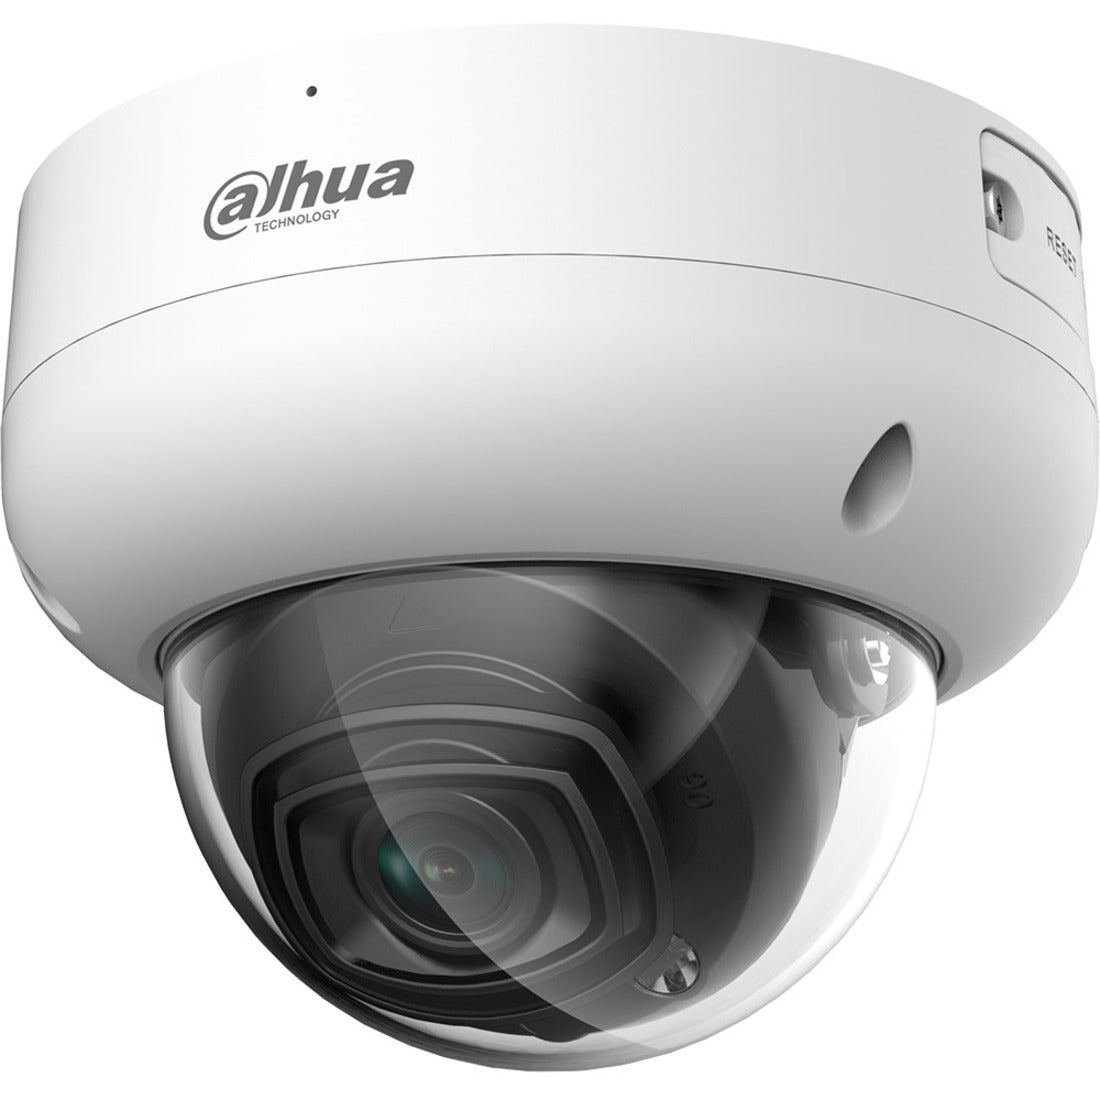 Dahua N45EYN2 4MP Night Color 2.0 Fixed-Lens Network Dome Camera, Outdoor, IK10, IP67